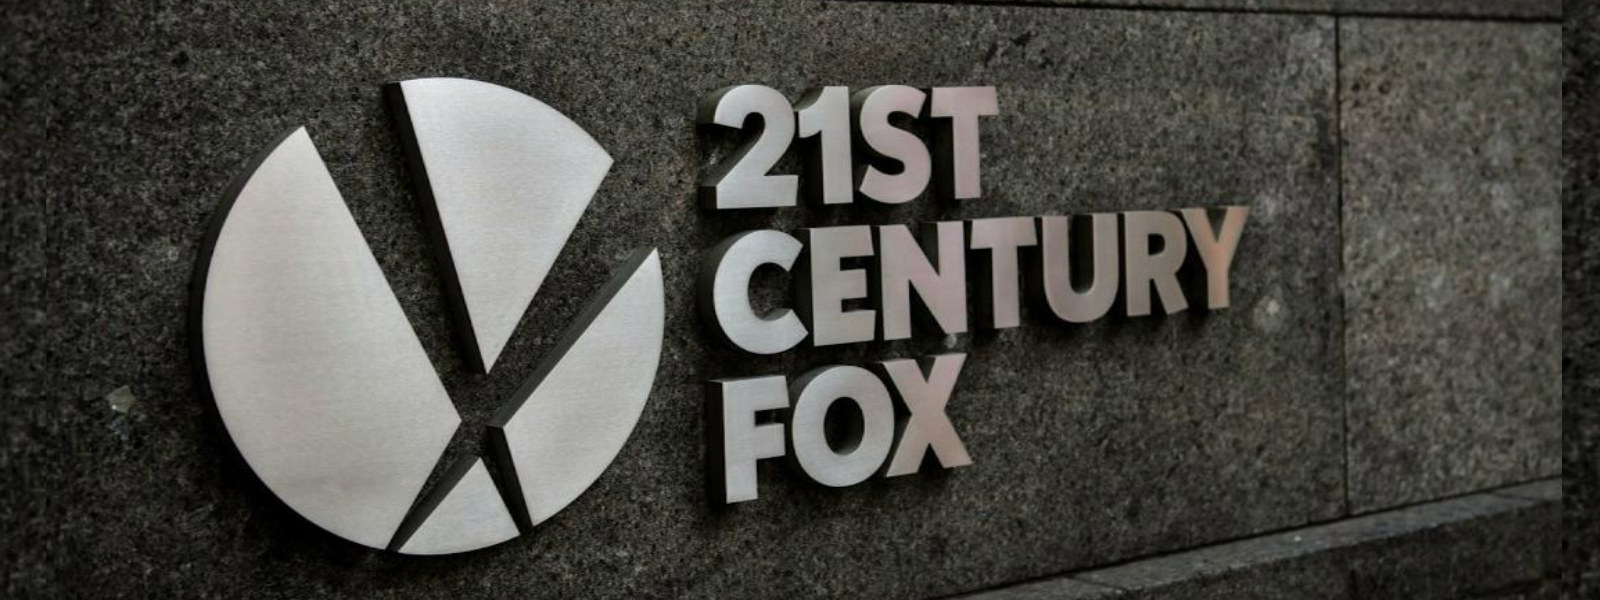 21st Century Fox offices raided